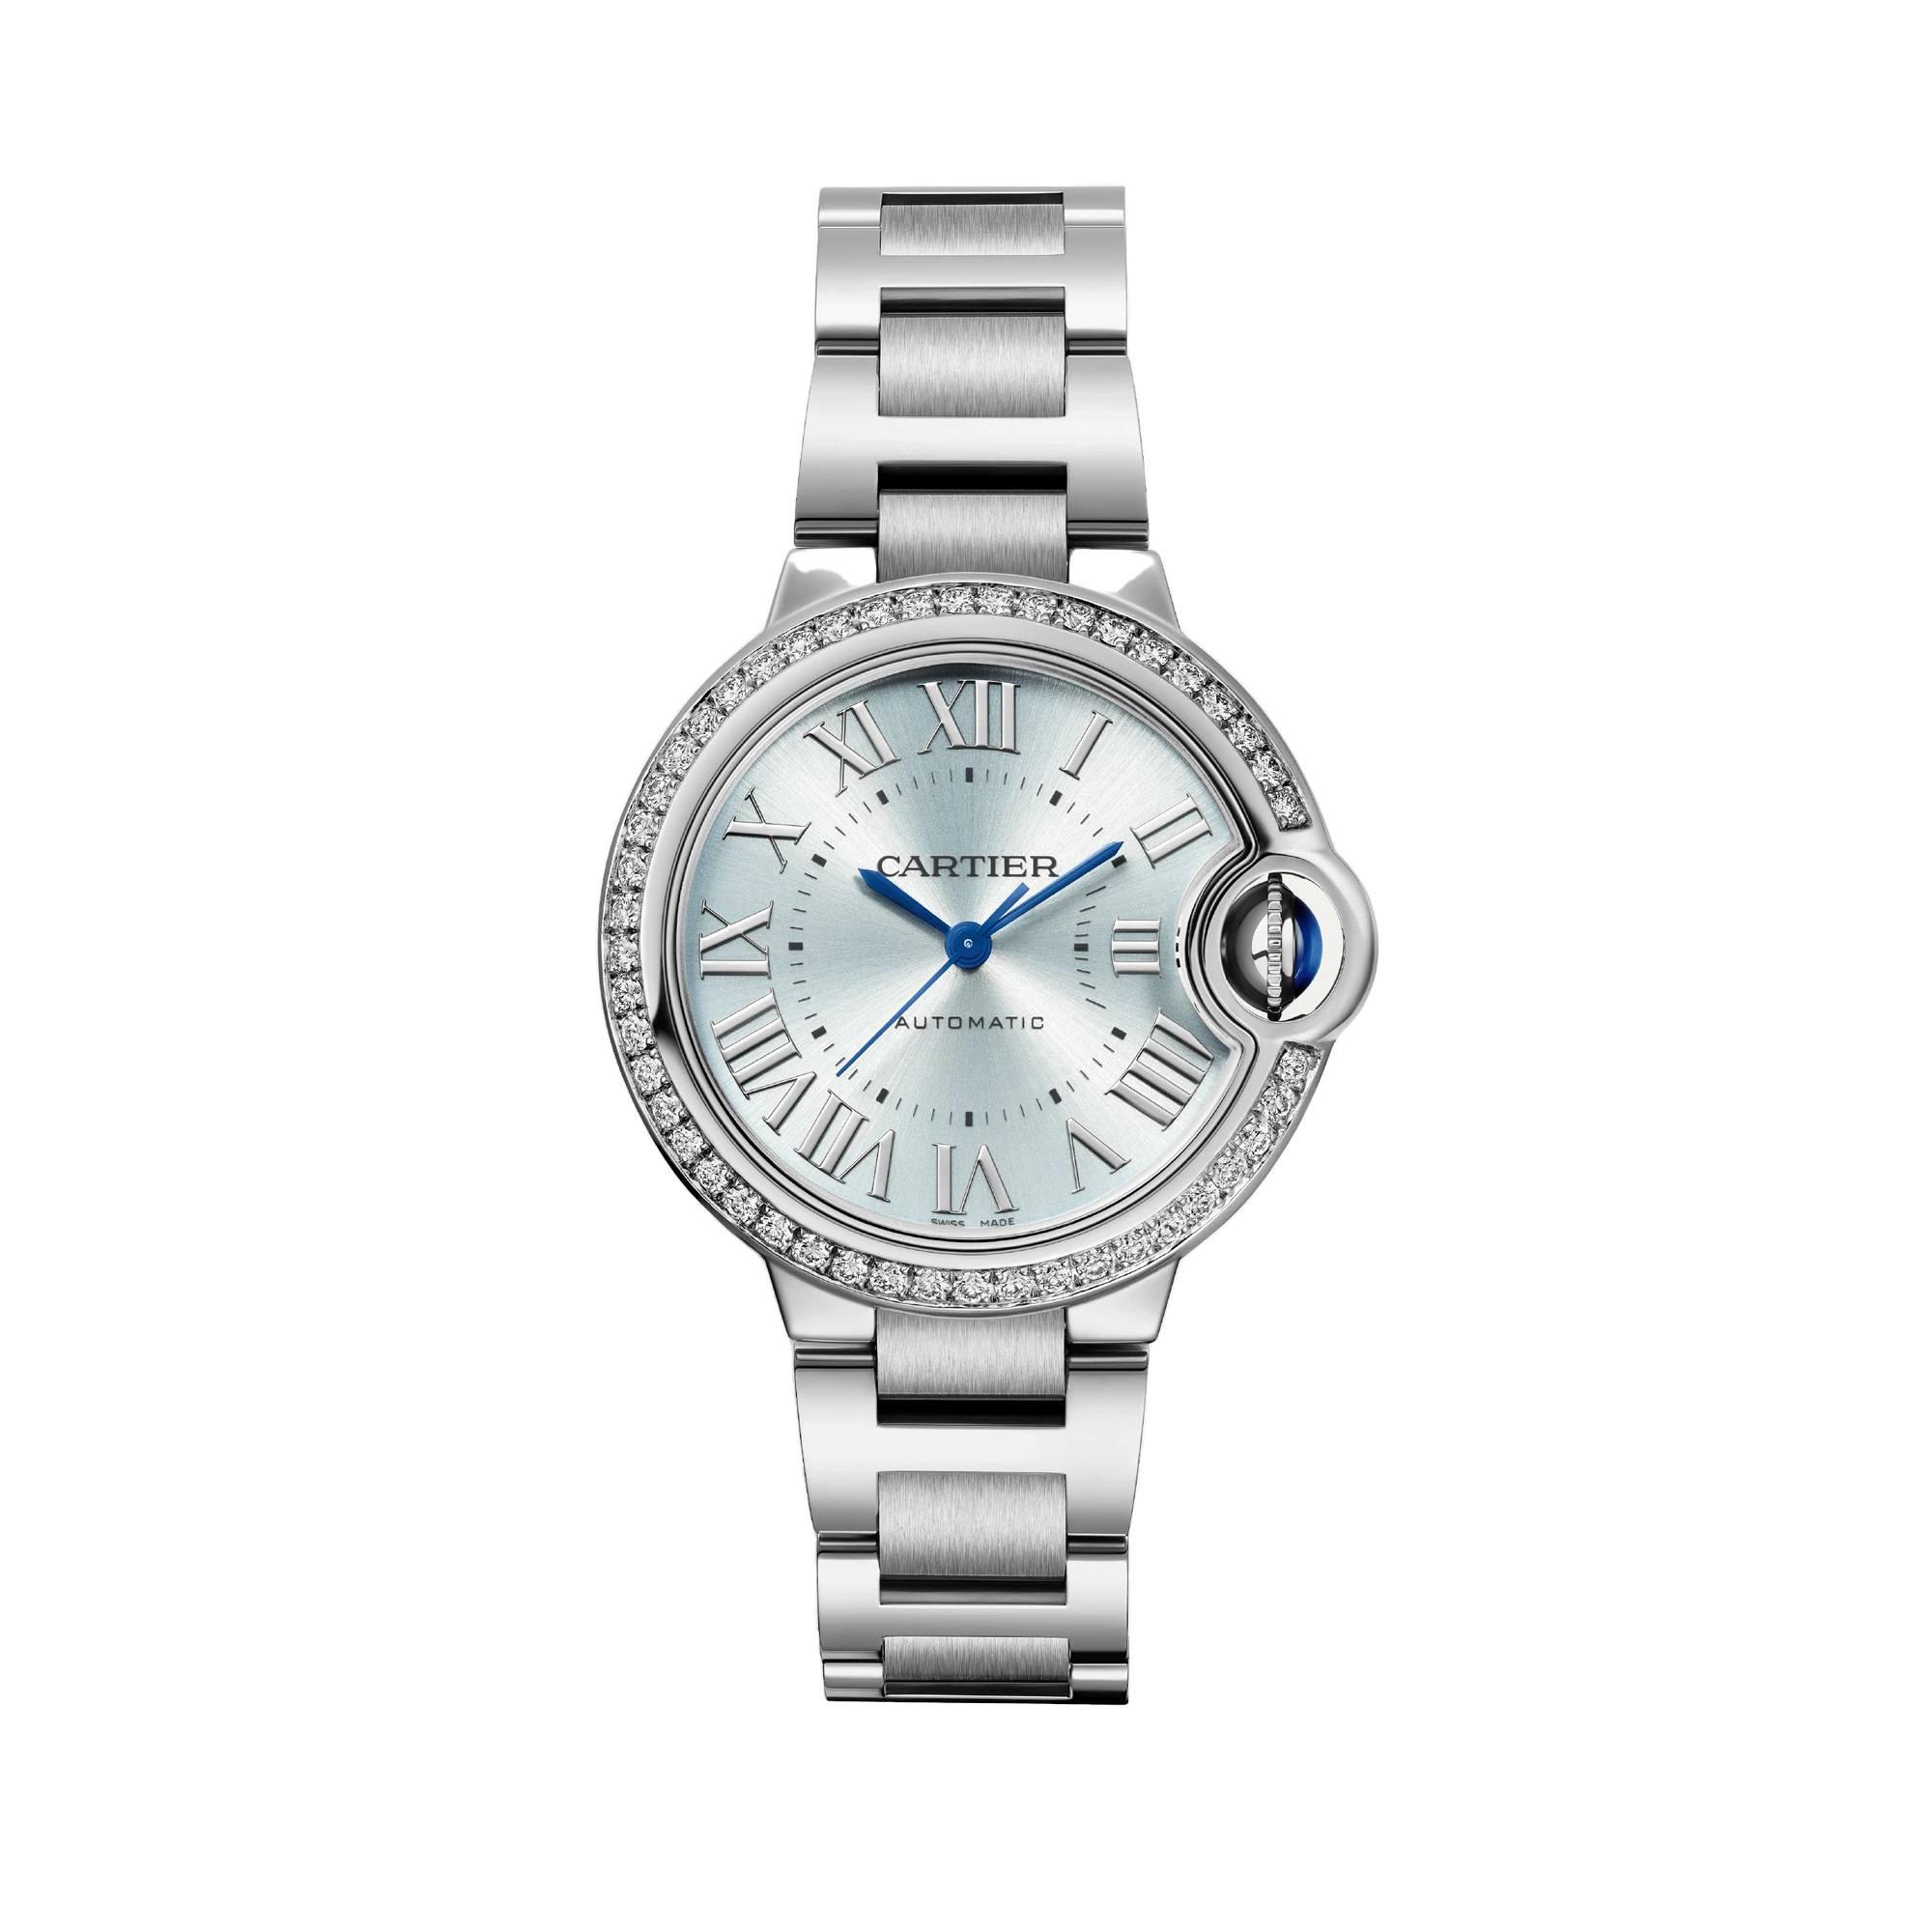 Ballon Bleu de Cartier Watch, Blue Silvered Sunray-Brushed Dial with Diamonds, 33mm
